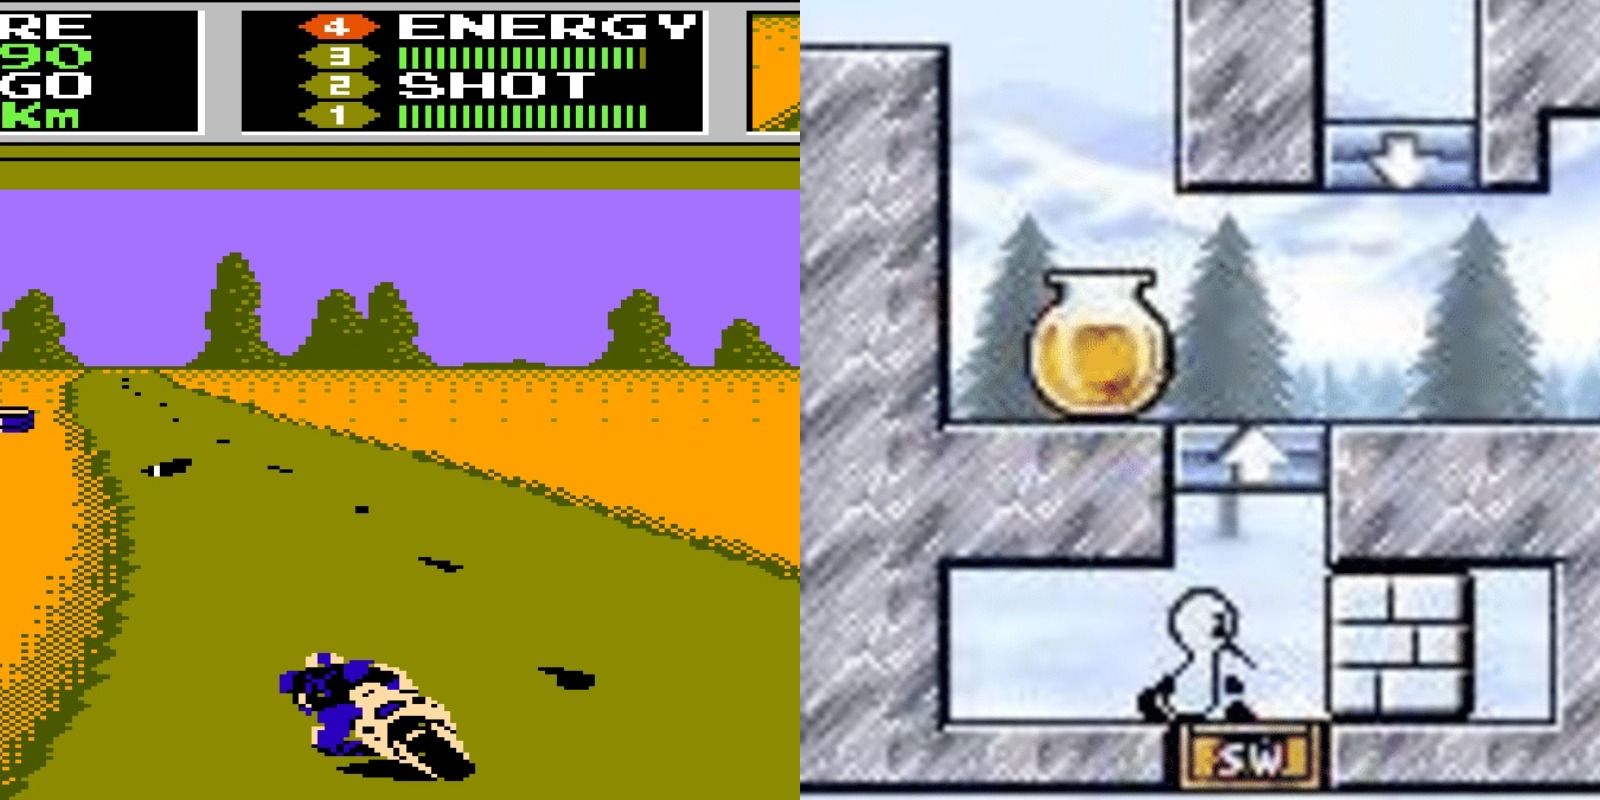 Split image of Mach Rider and Sutte Hakkun Nintendo games